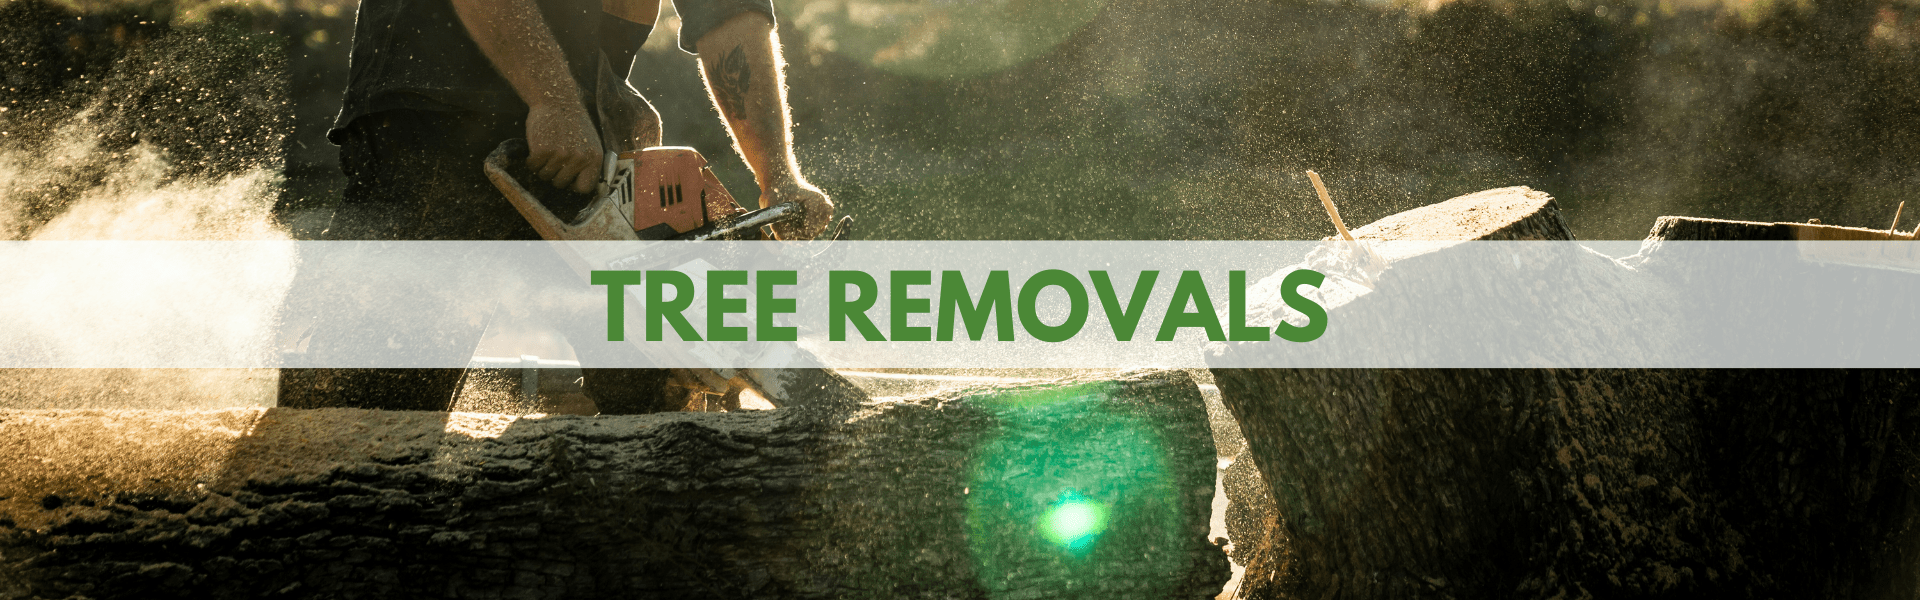 Tree-Removals